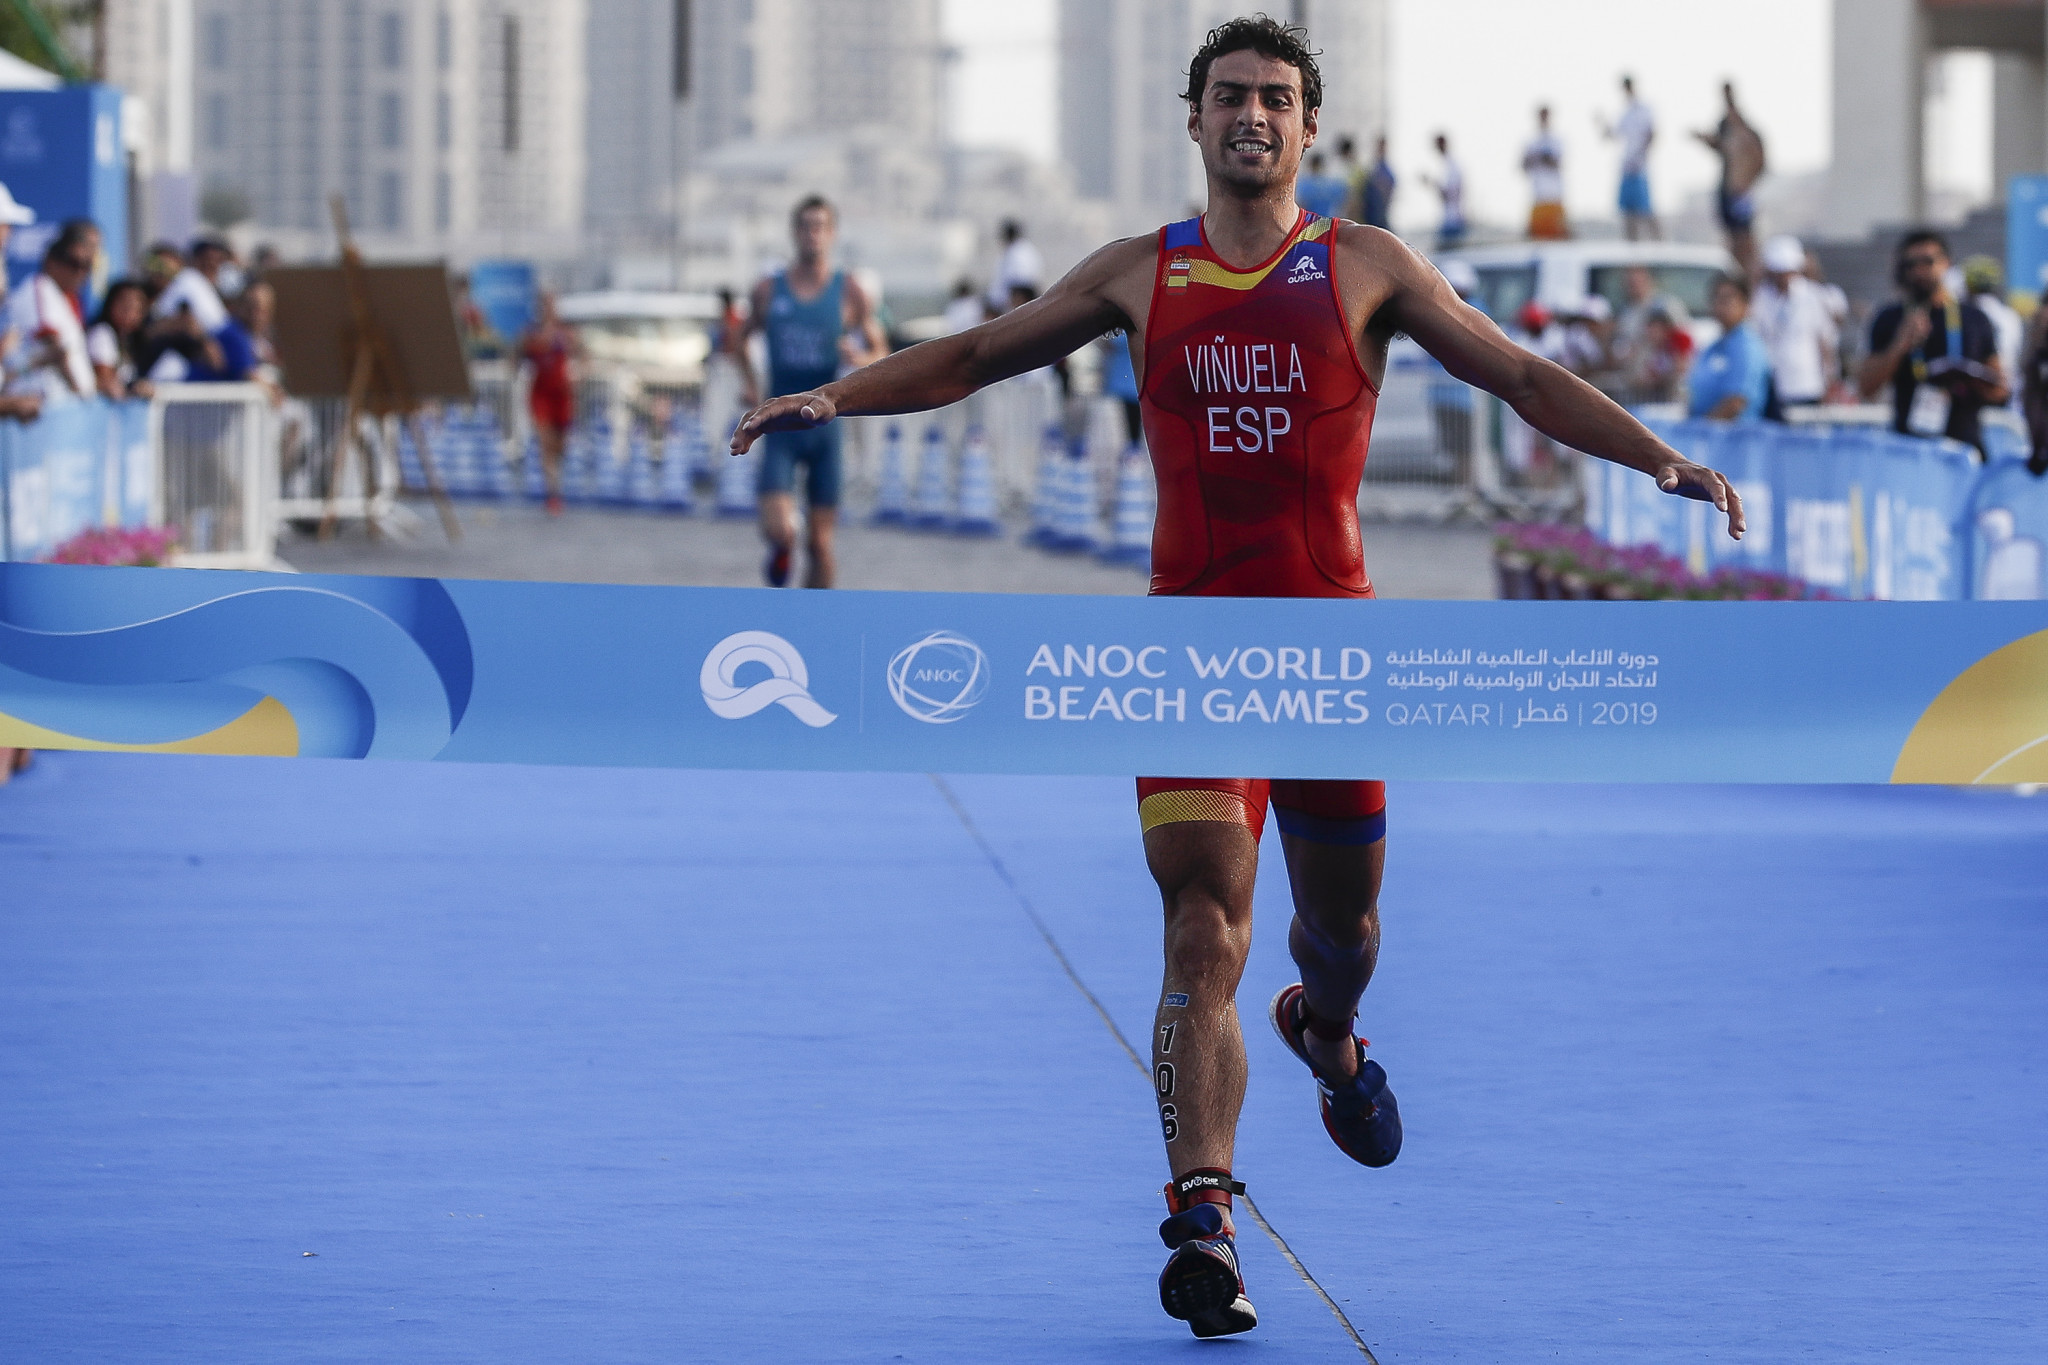 Spain's Kevin Vinuela celebrates winning the men's aquathlon race at the ANOC World Beach Games in Doha ©ANOC World Beach Games